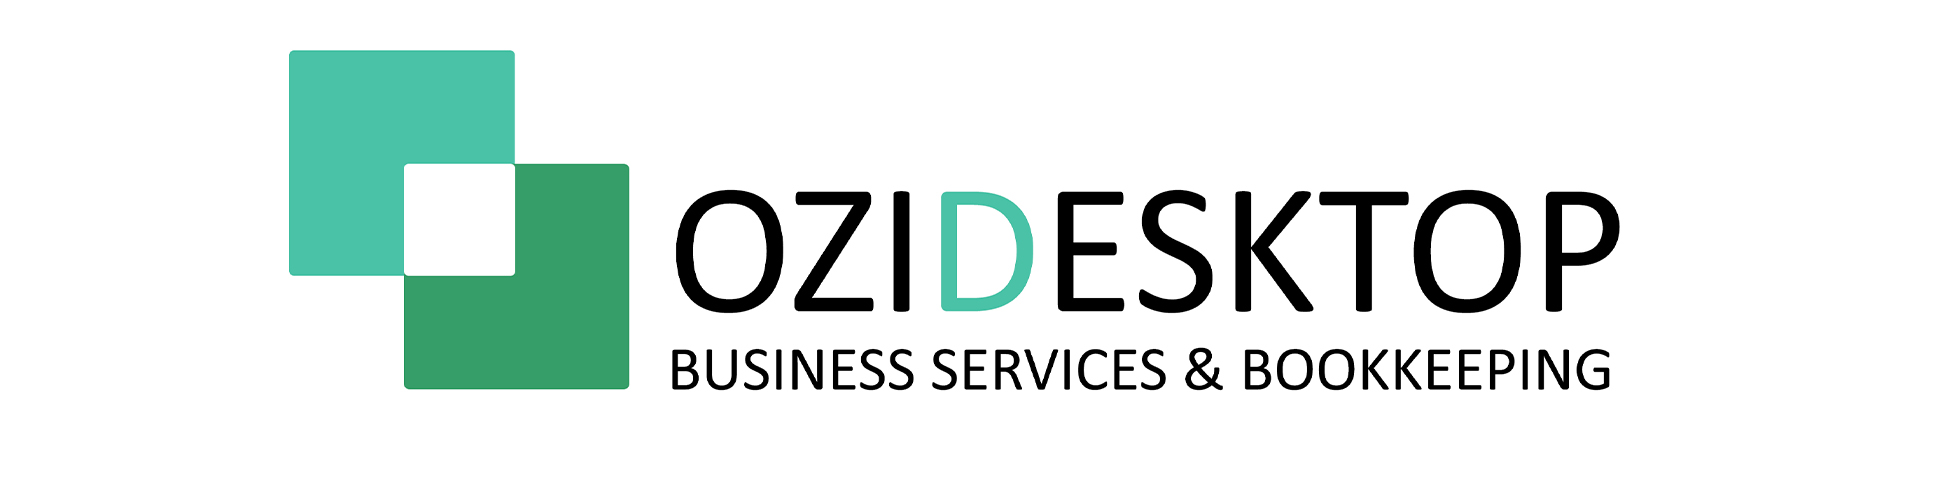 OziDesktop Business Services & Bookkeeping logo | Ravit Insights